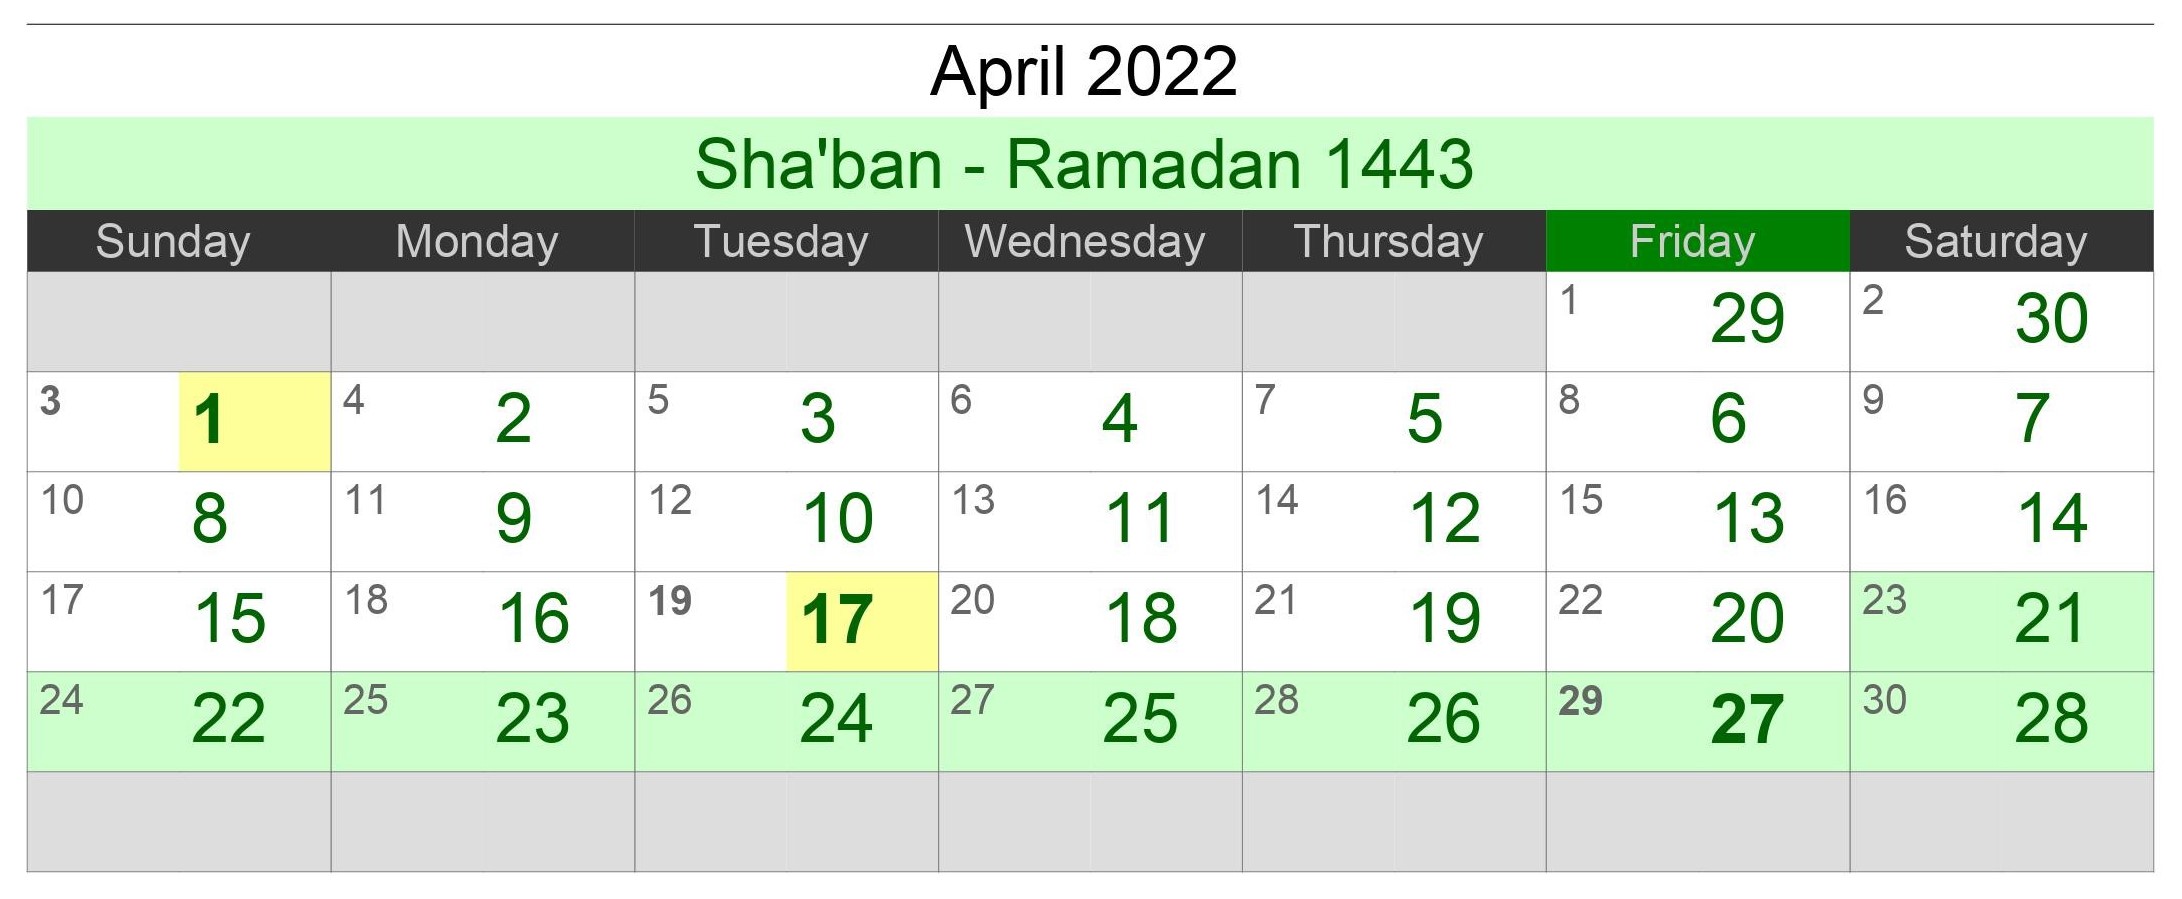 Get Calendar 2022 Ramadan Images - My Gallery Pics